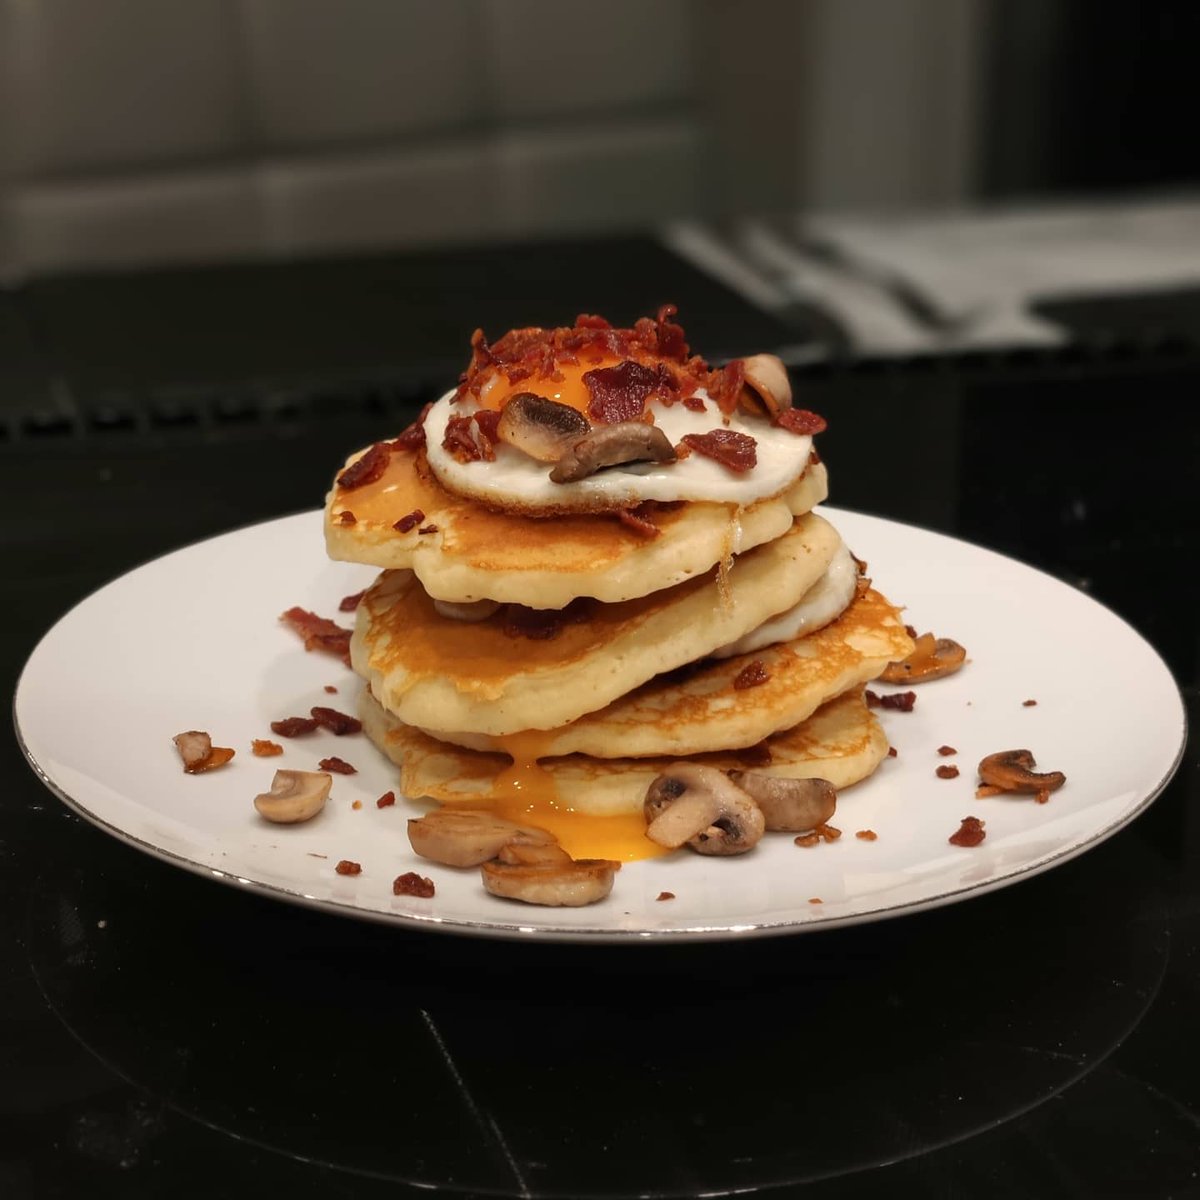 Or Savoury...? #pancakeday #pancakestack #PancakeDay2021 #PancakeTuesday